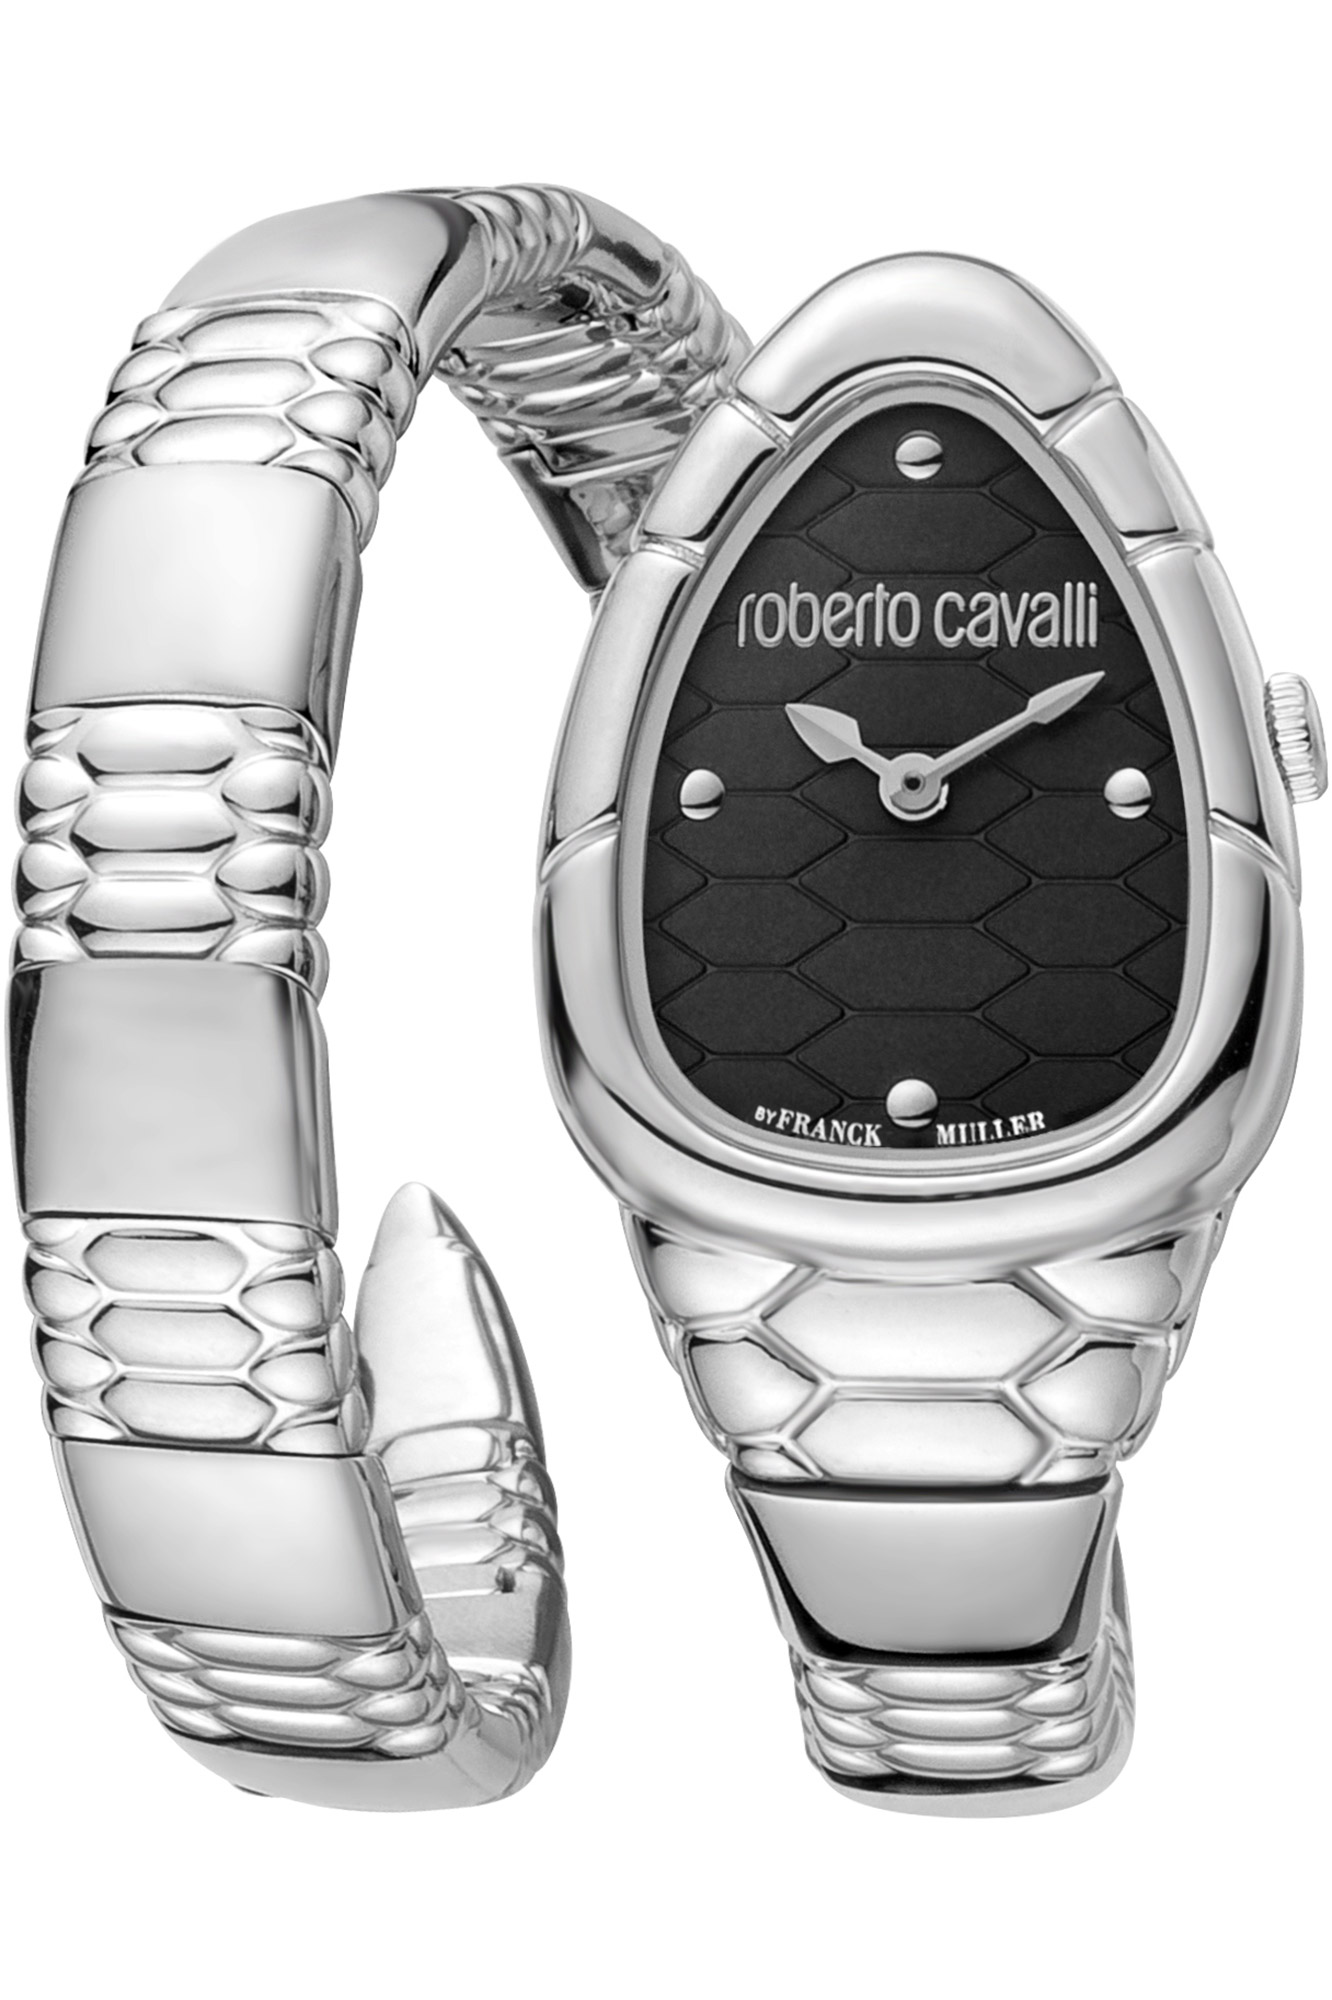 Watch Roberto Cavalli by Franck Muller rv1l184m0021